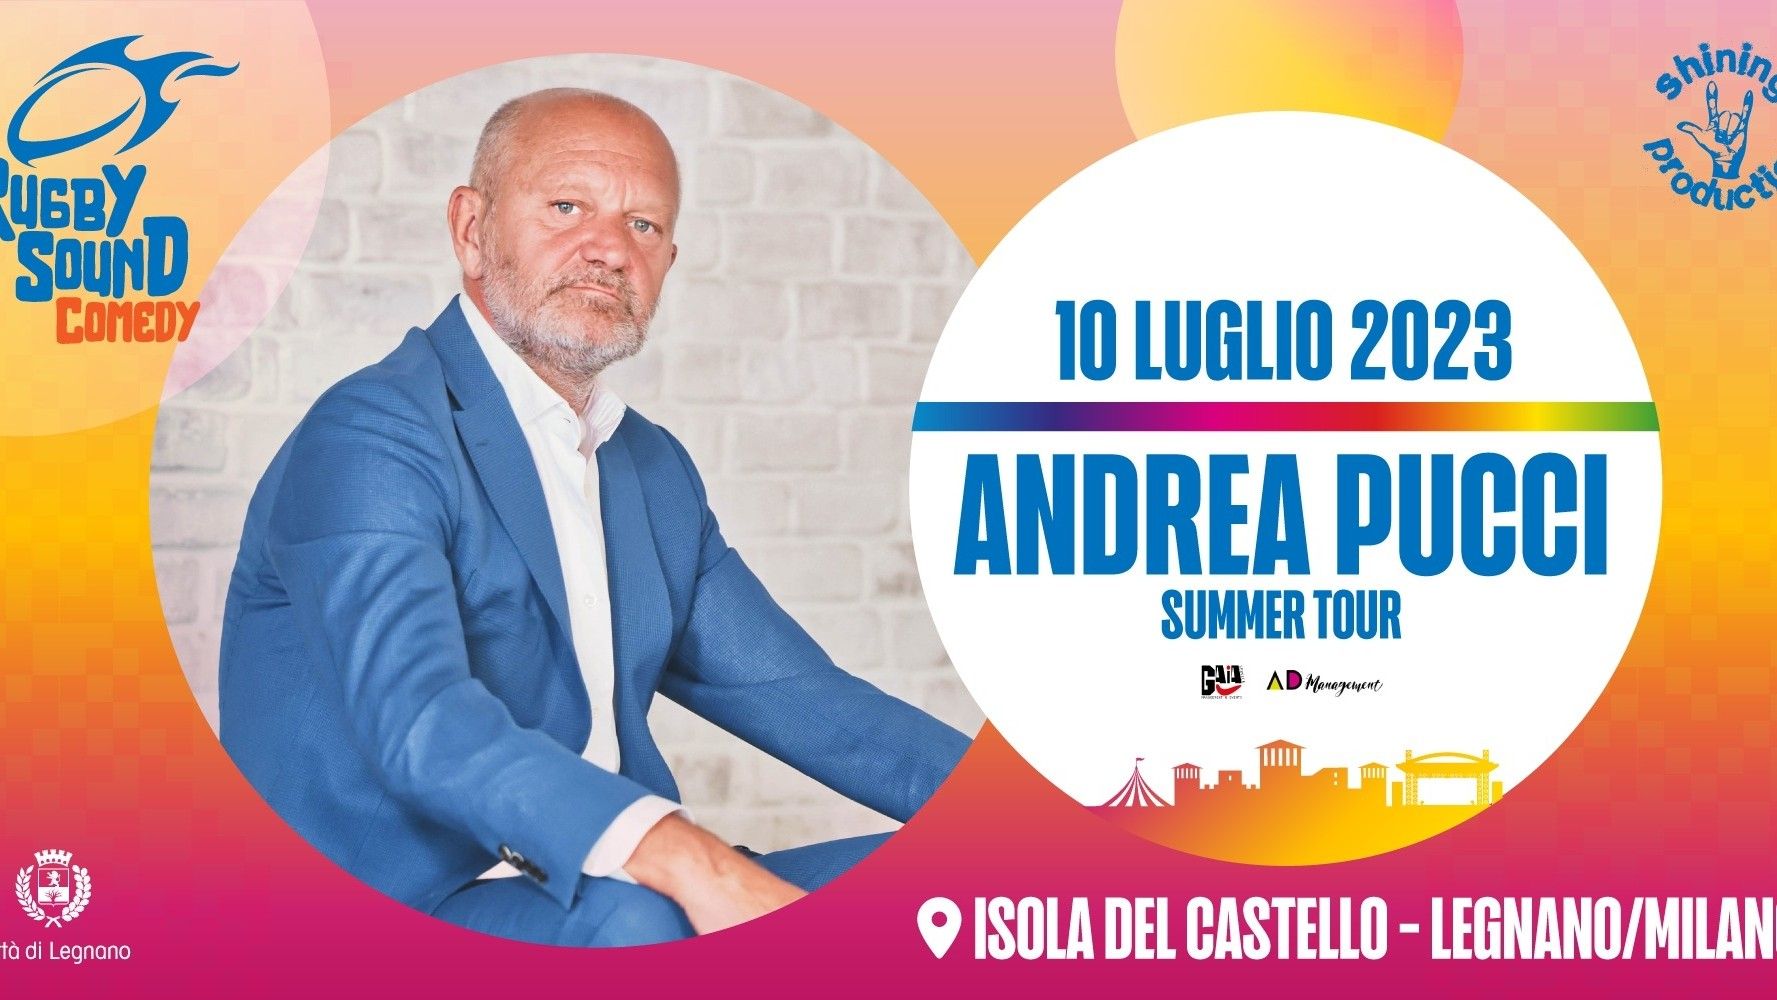 Andrea Pucci "Summer Tour"